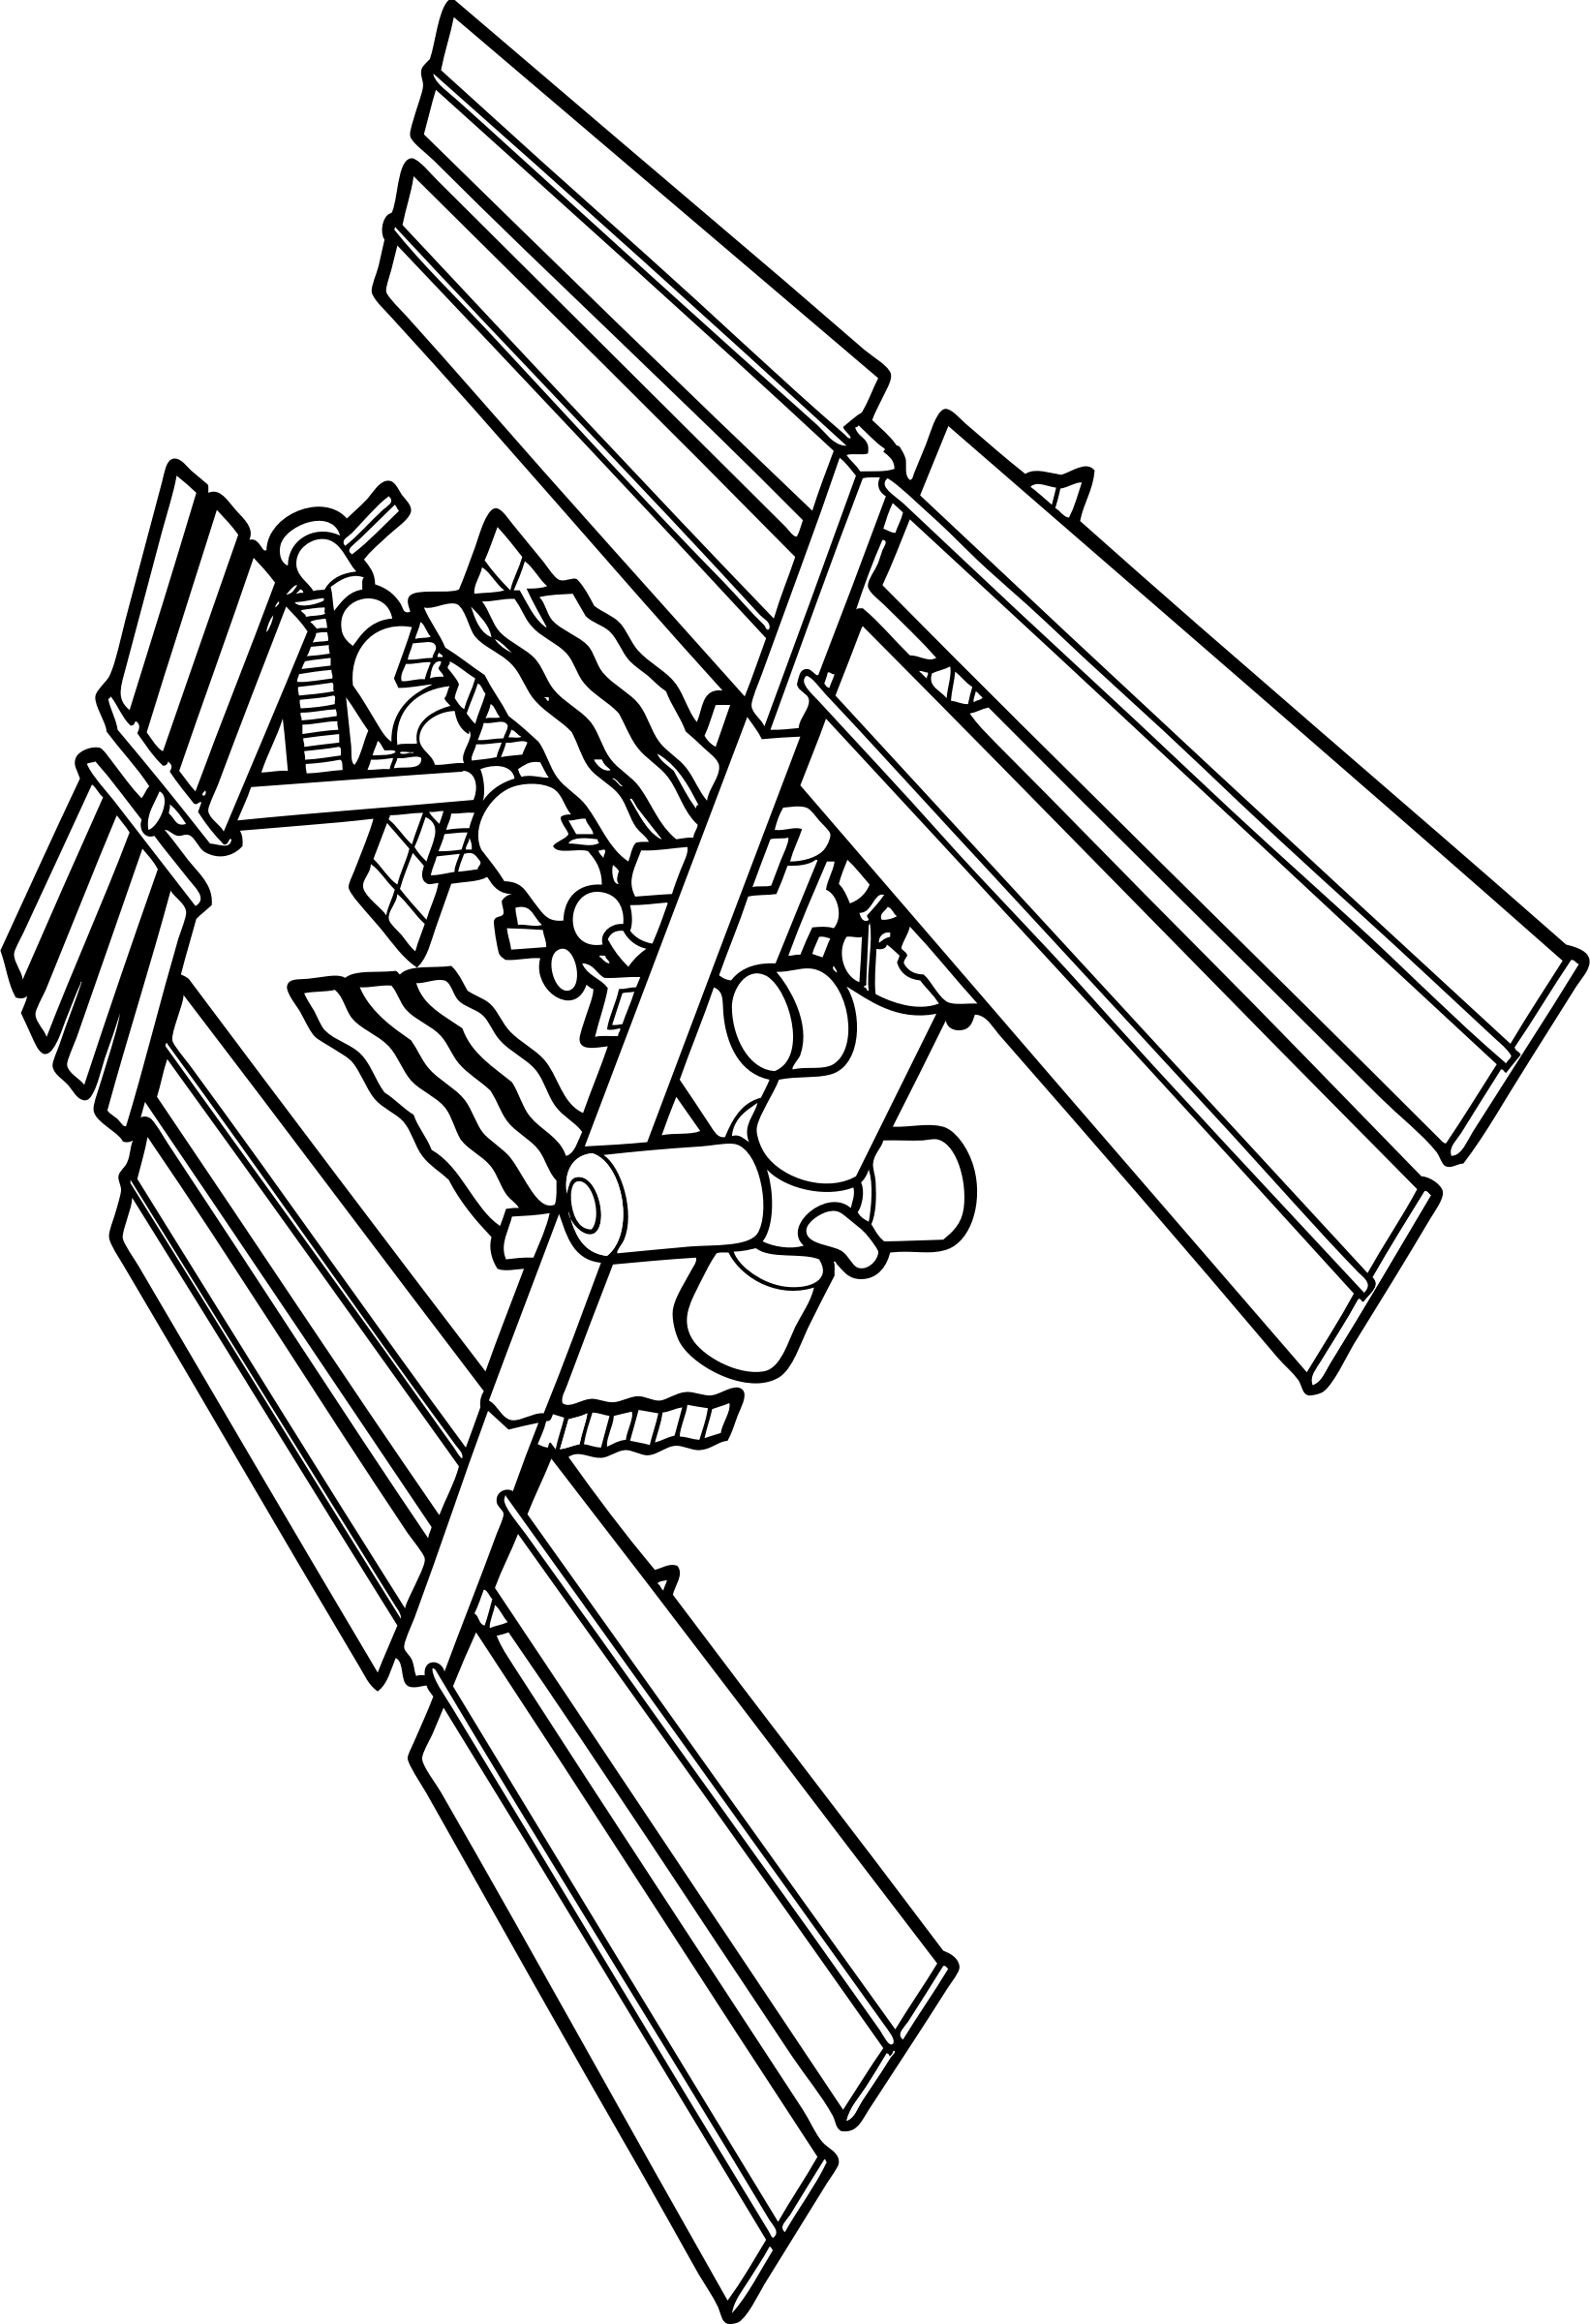 International Space Station SVG Clip arts